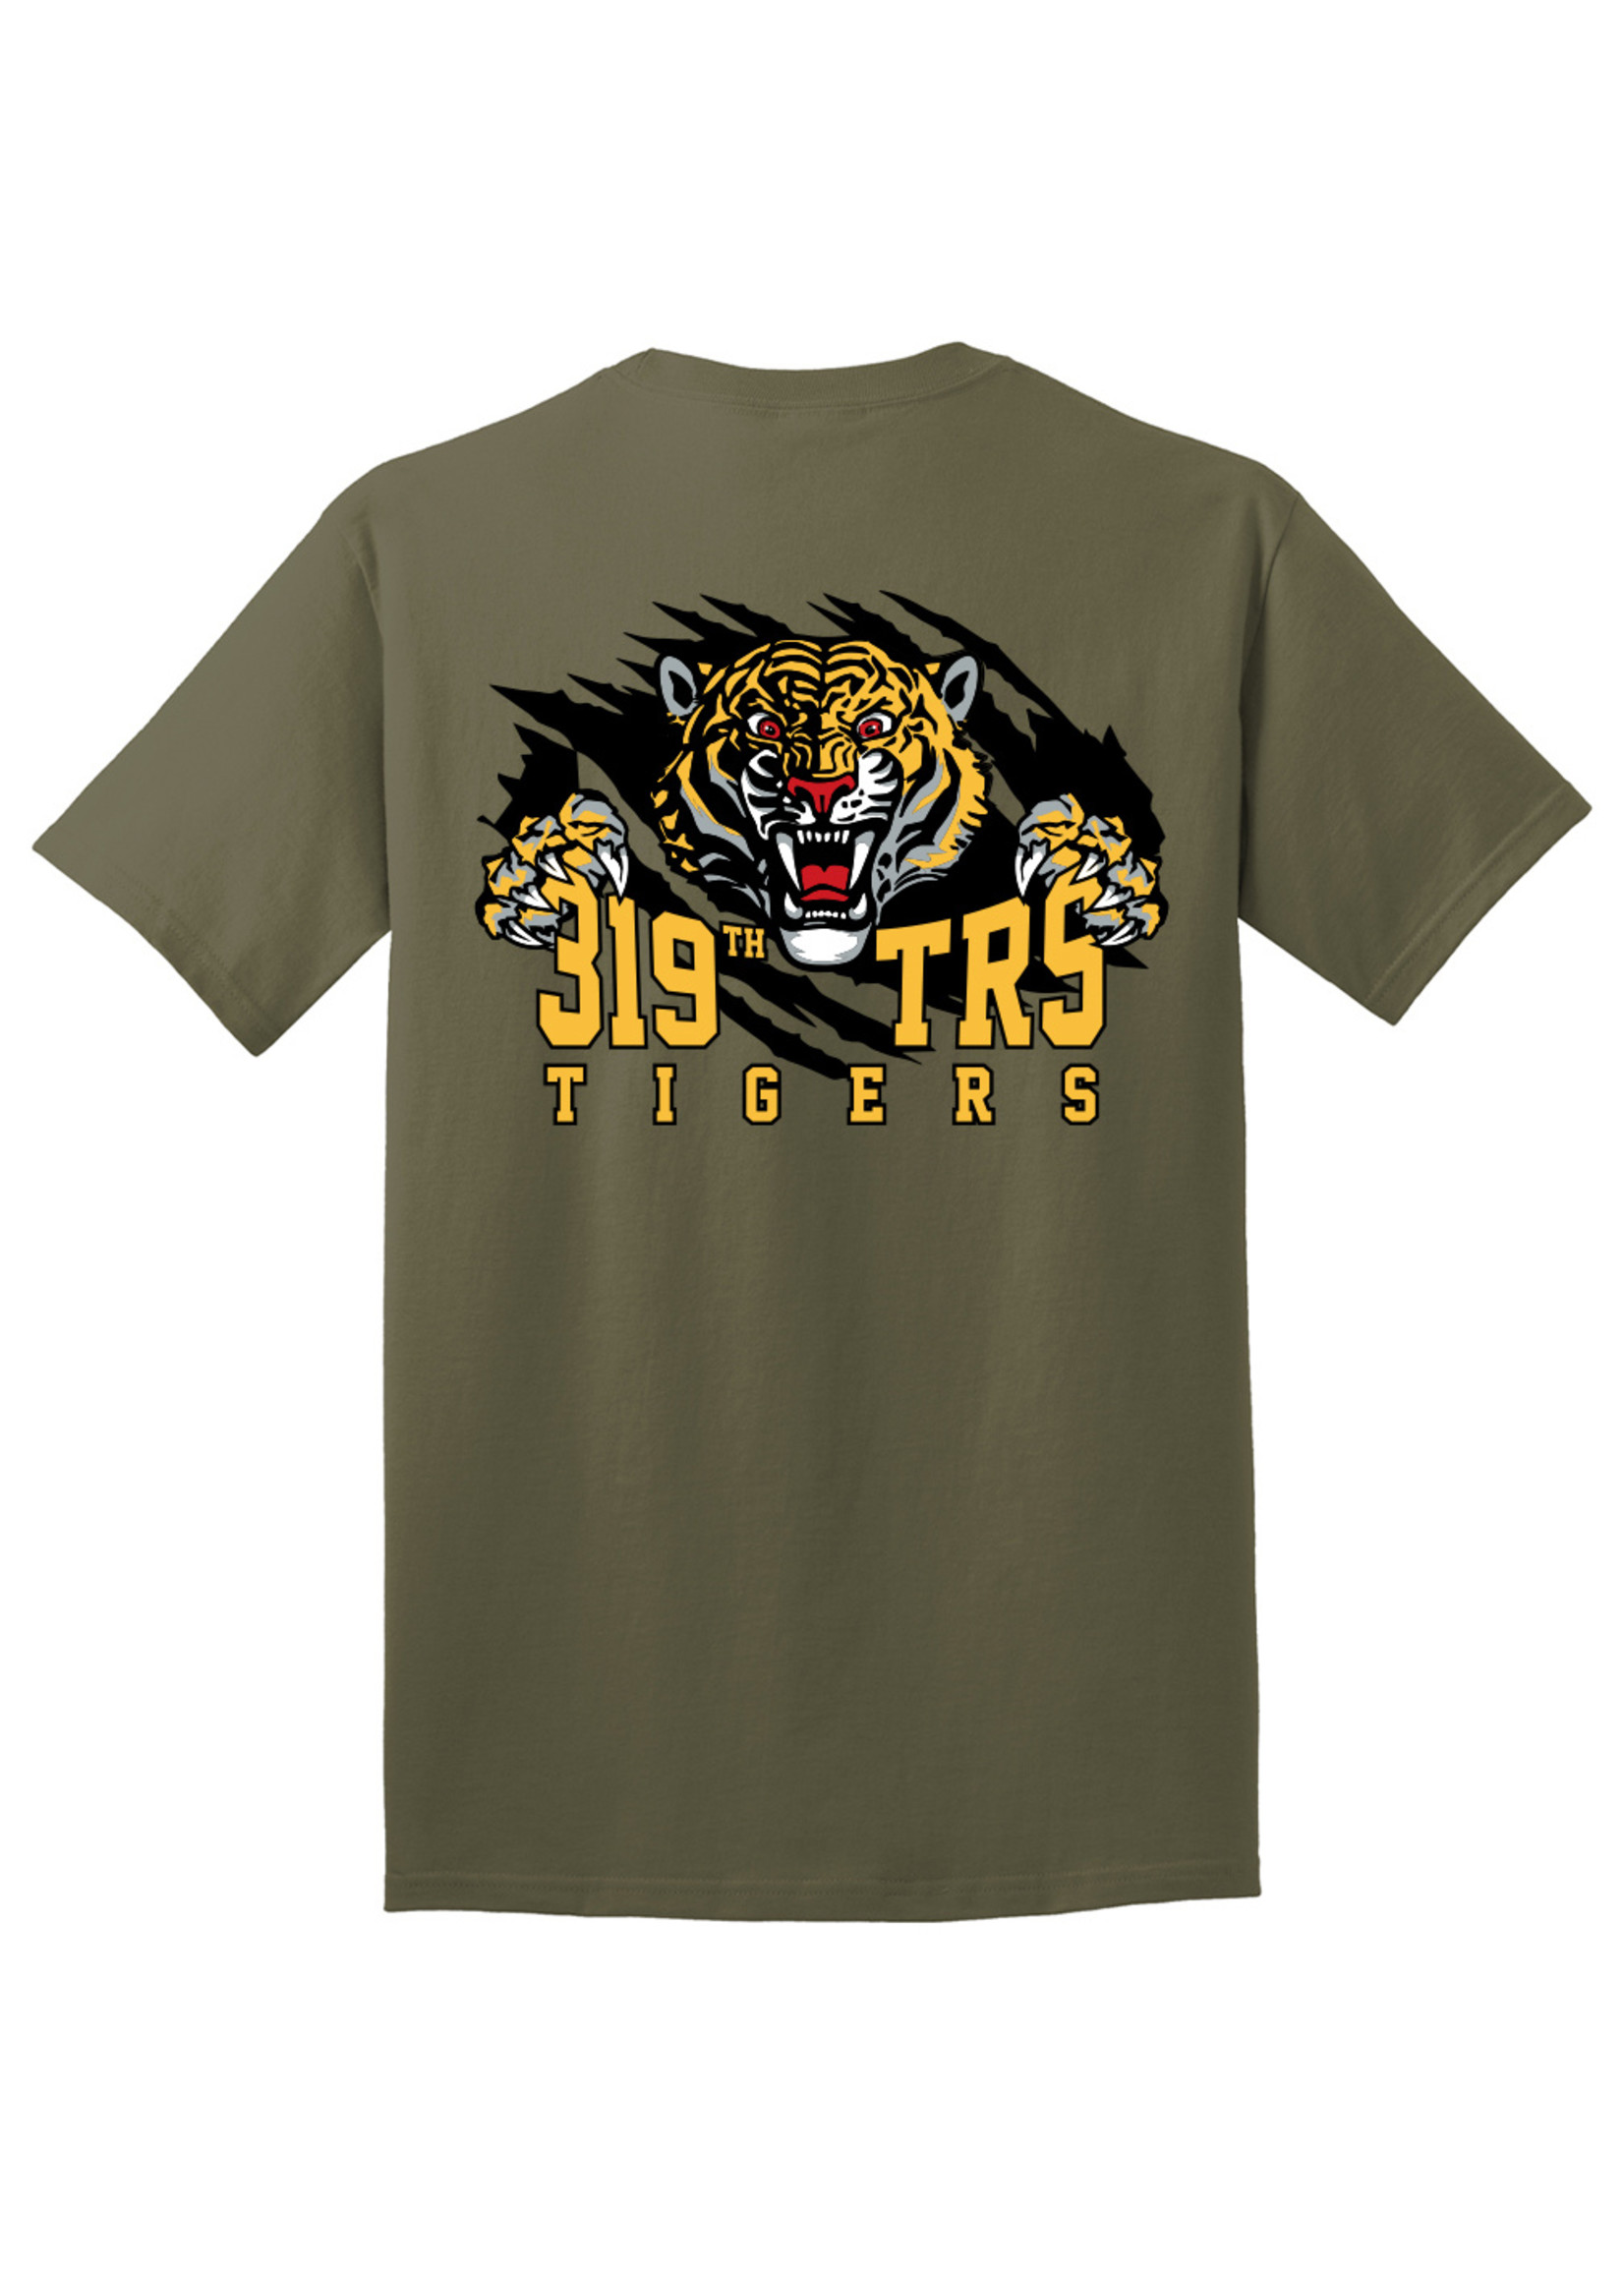 319th Tigers Wicking Shirt